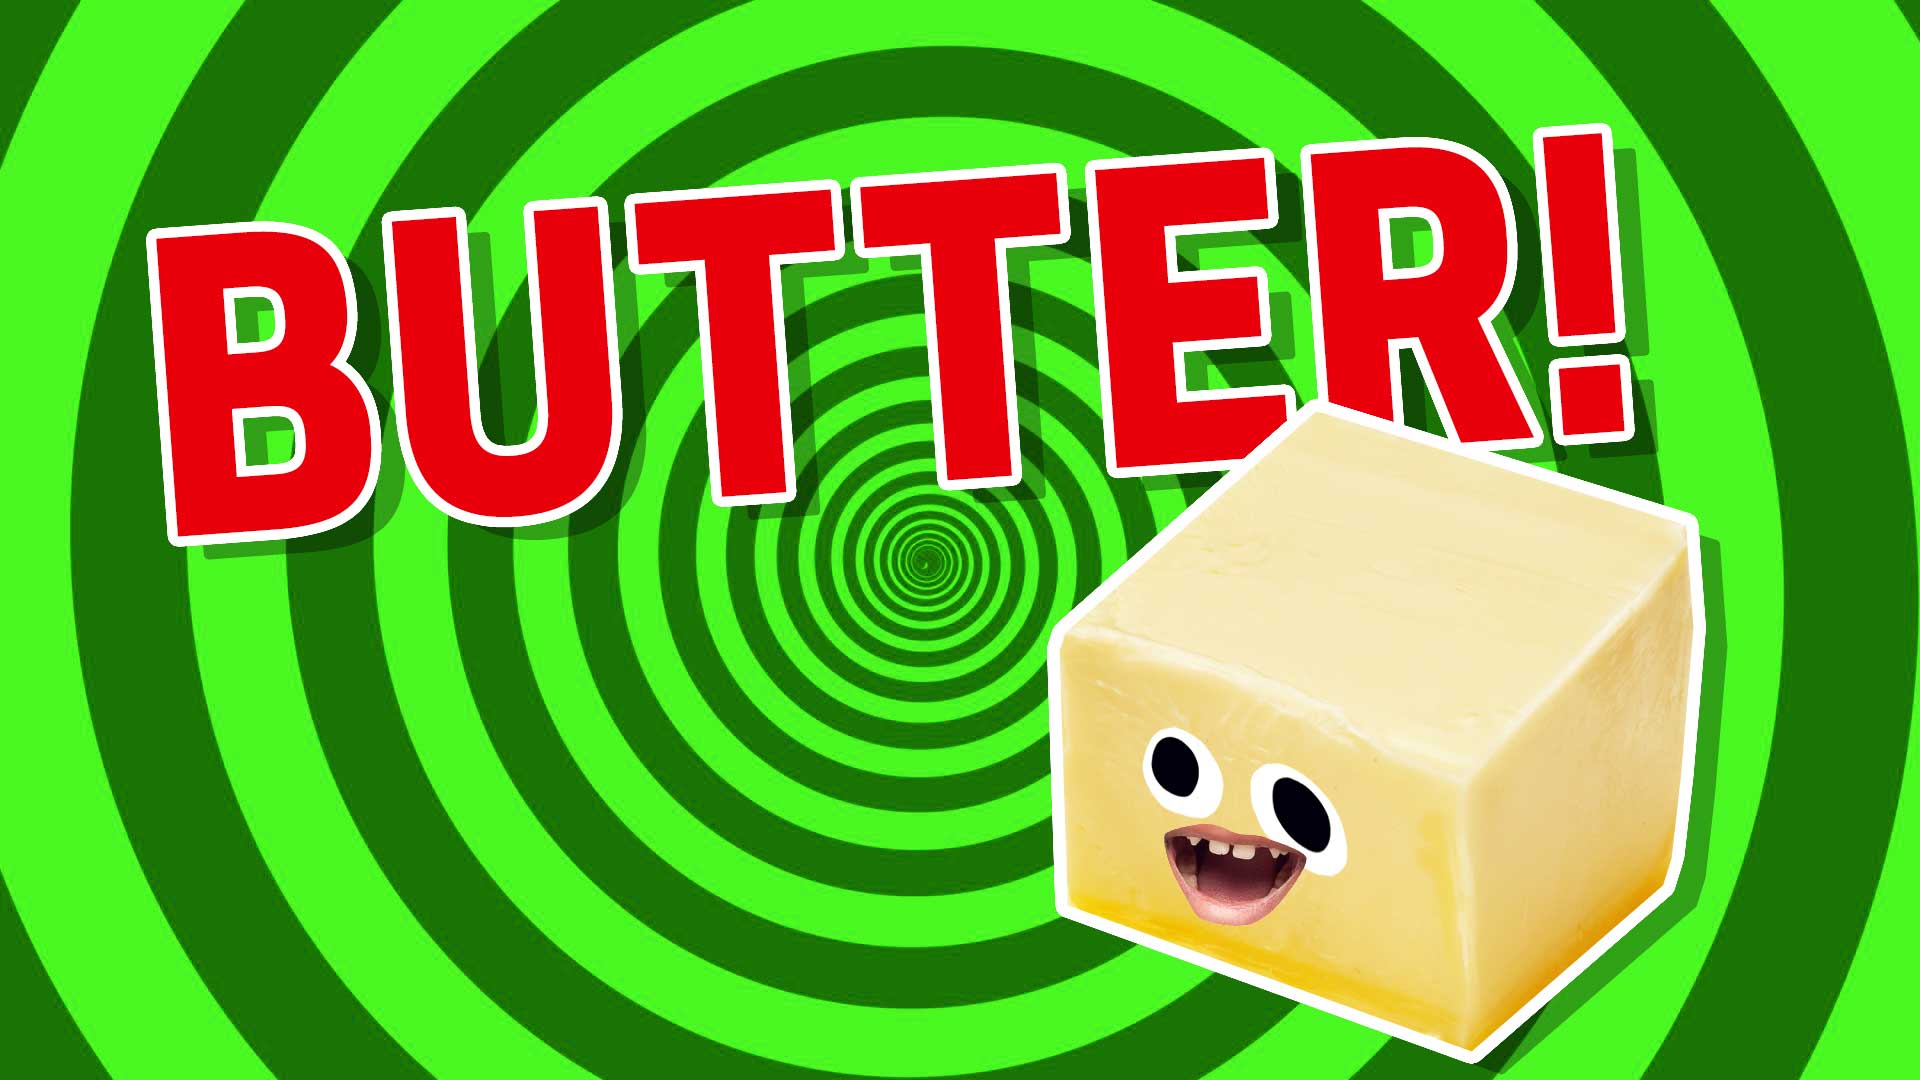 Result: Butter